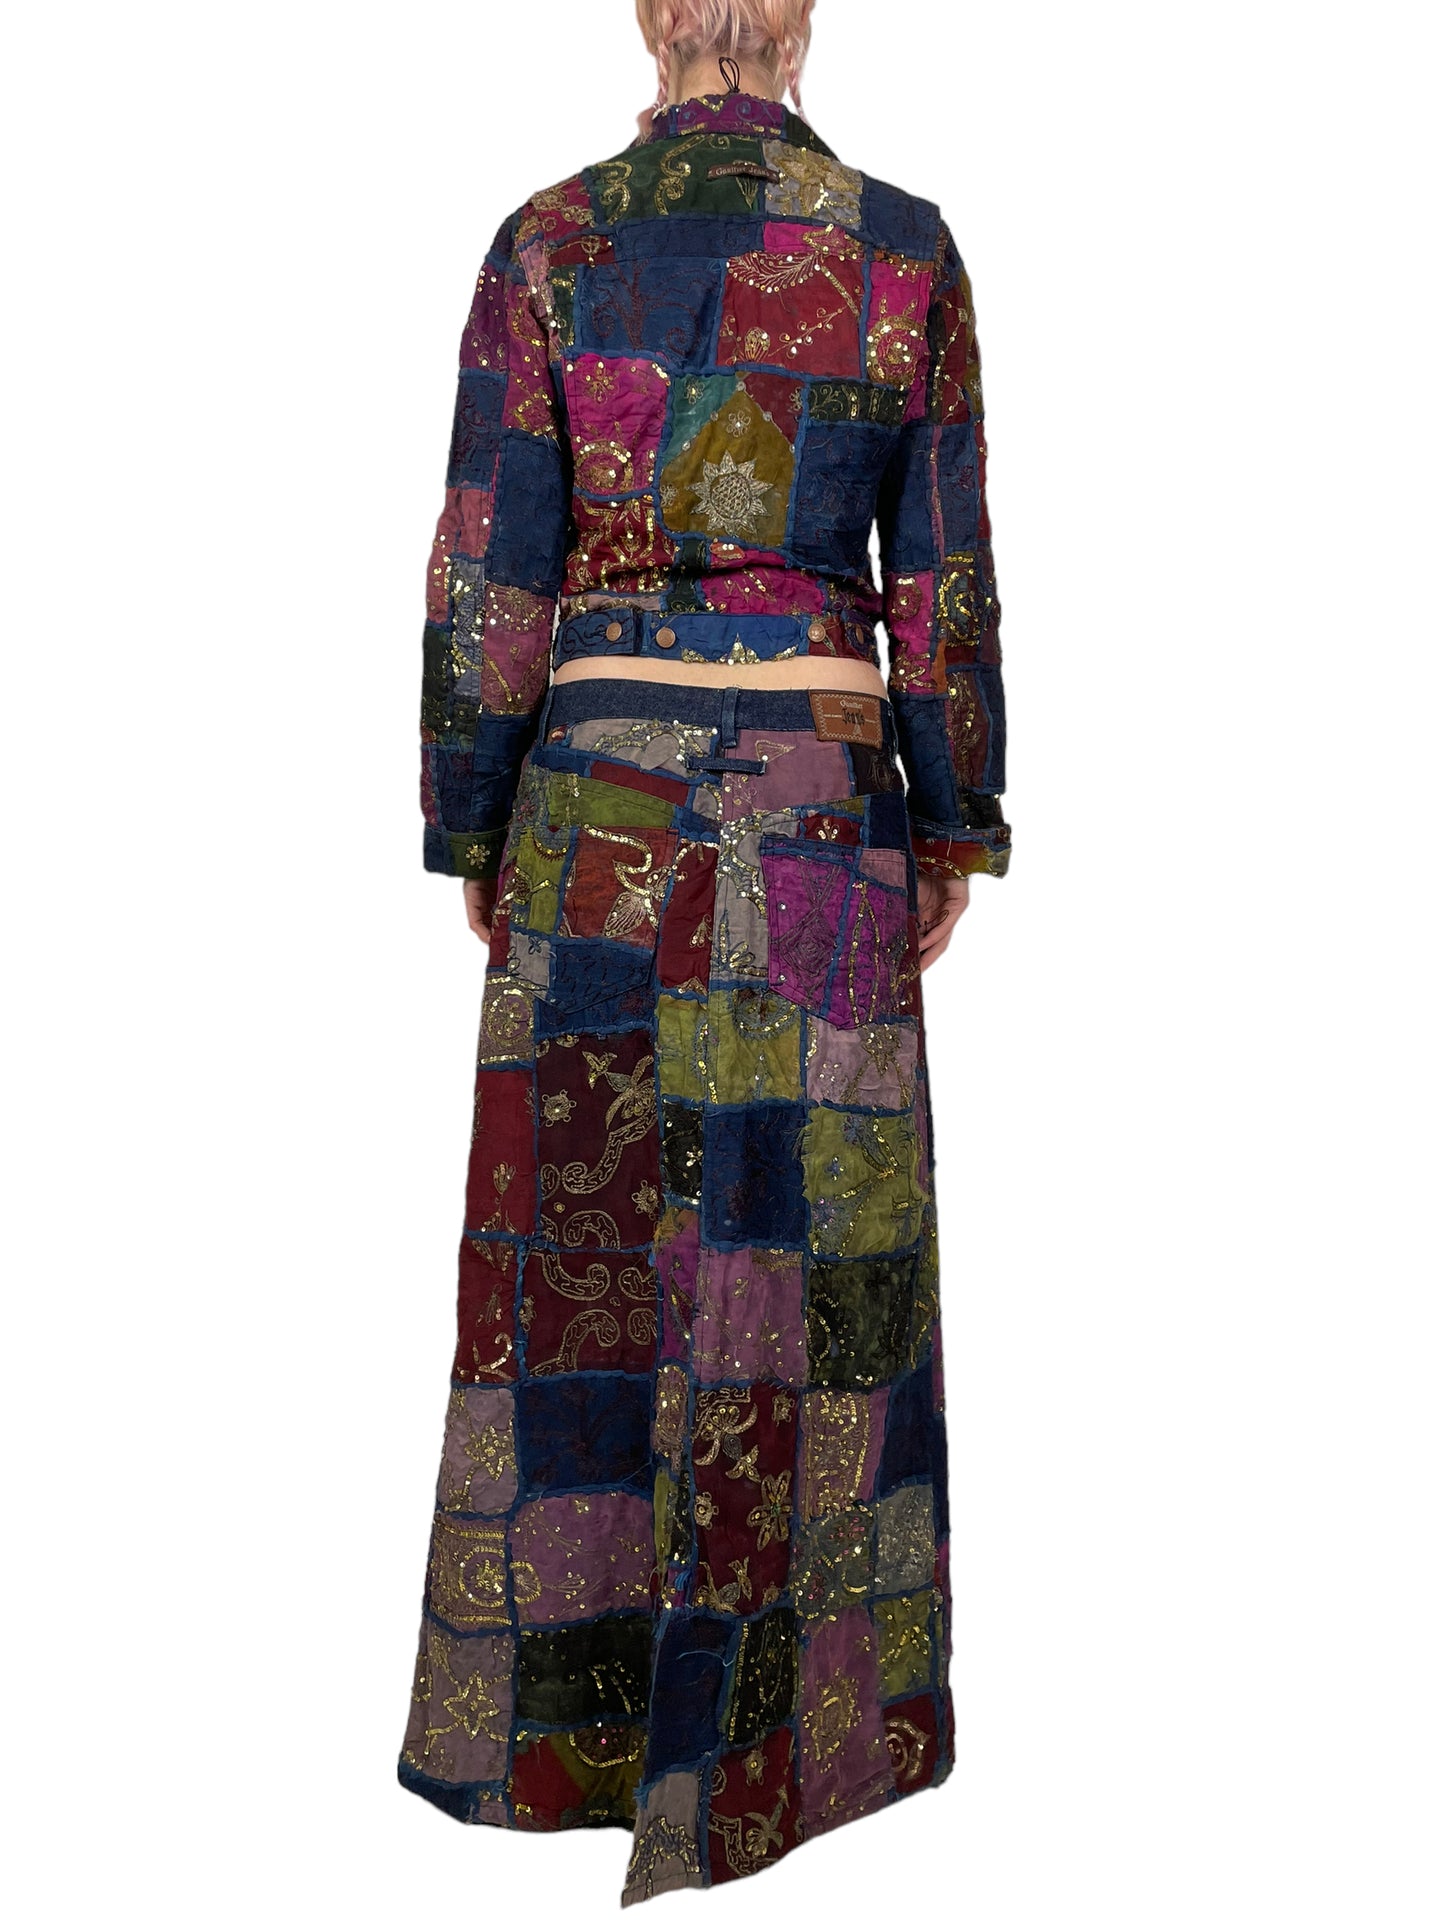 S/S 1999 Jean Paul Gaultier patchwork skirt